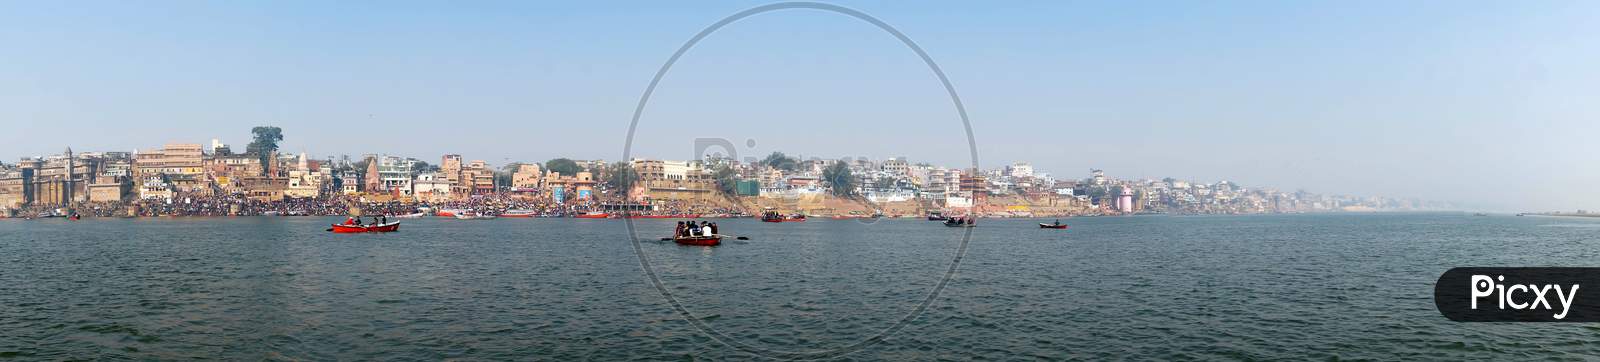 Panorama Of The Waterfront City Of Varanasi Taken. India